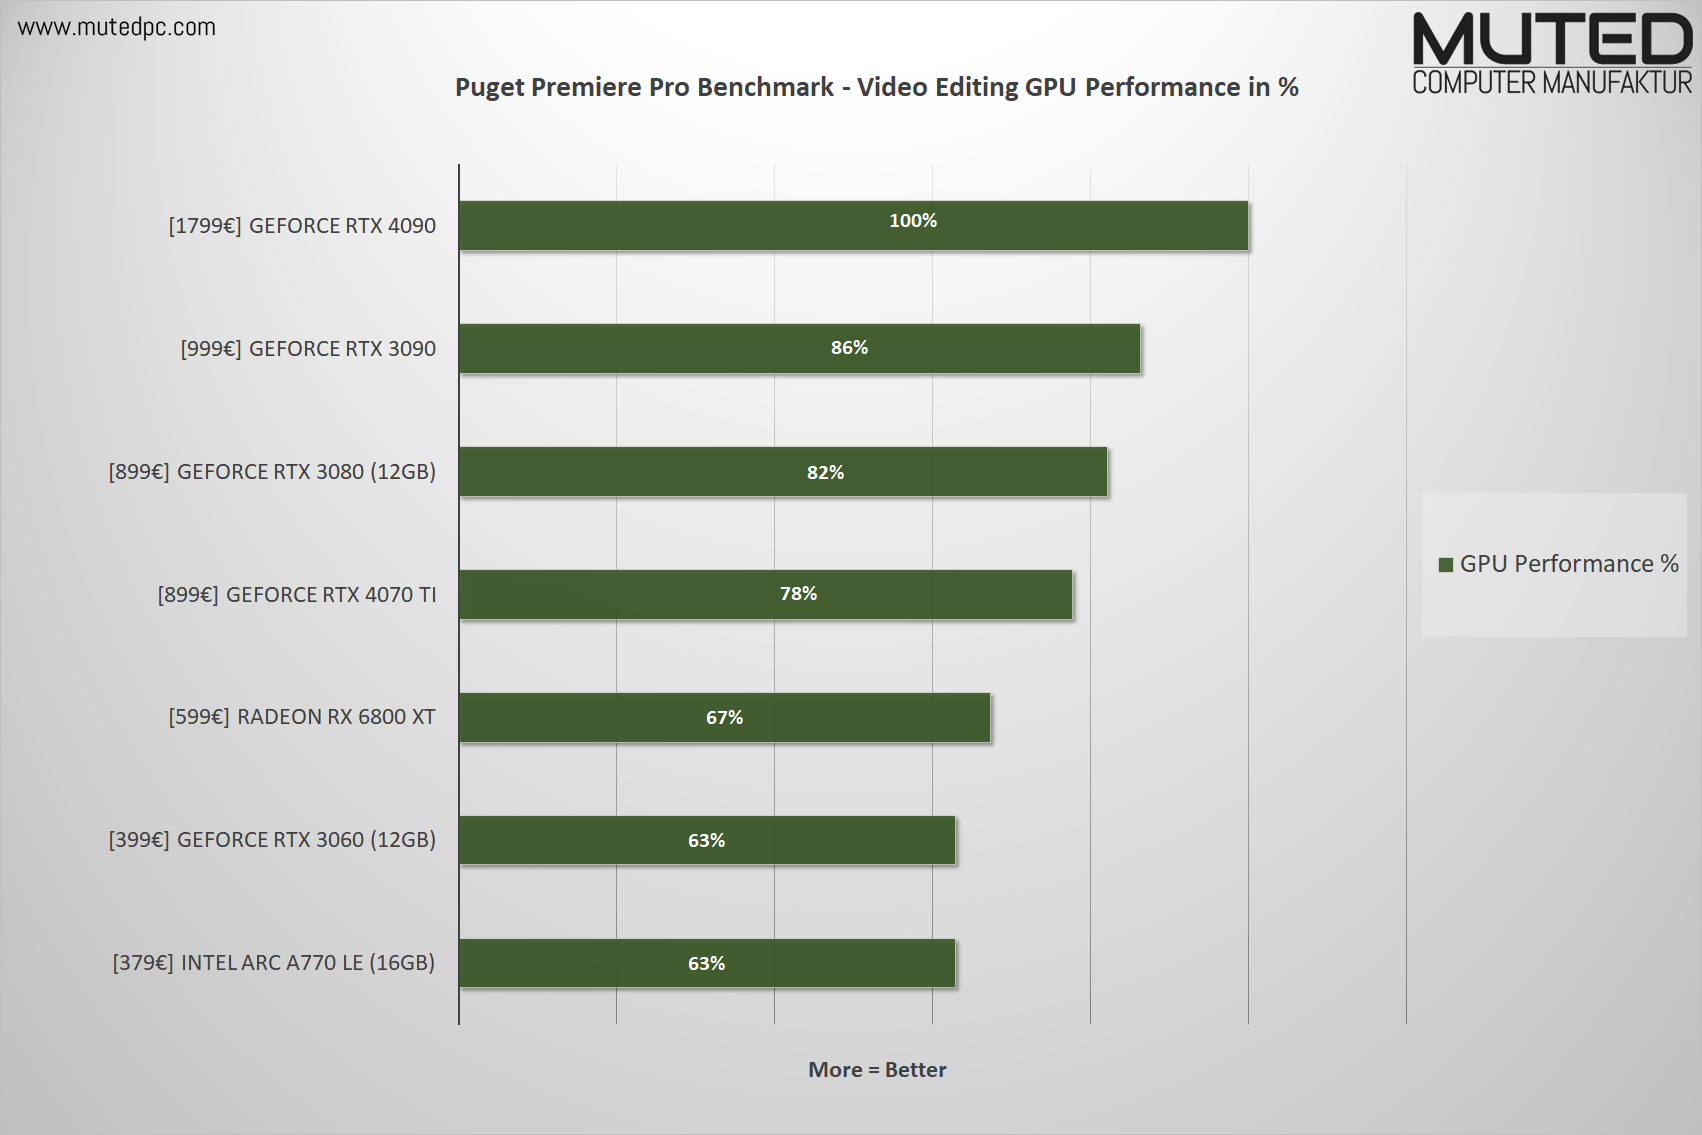 Puget Premiere Pro Benchmark - Video Editing GPU Performance